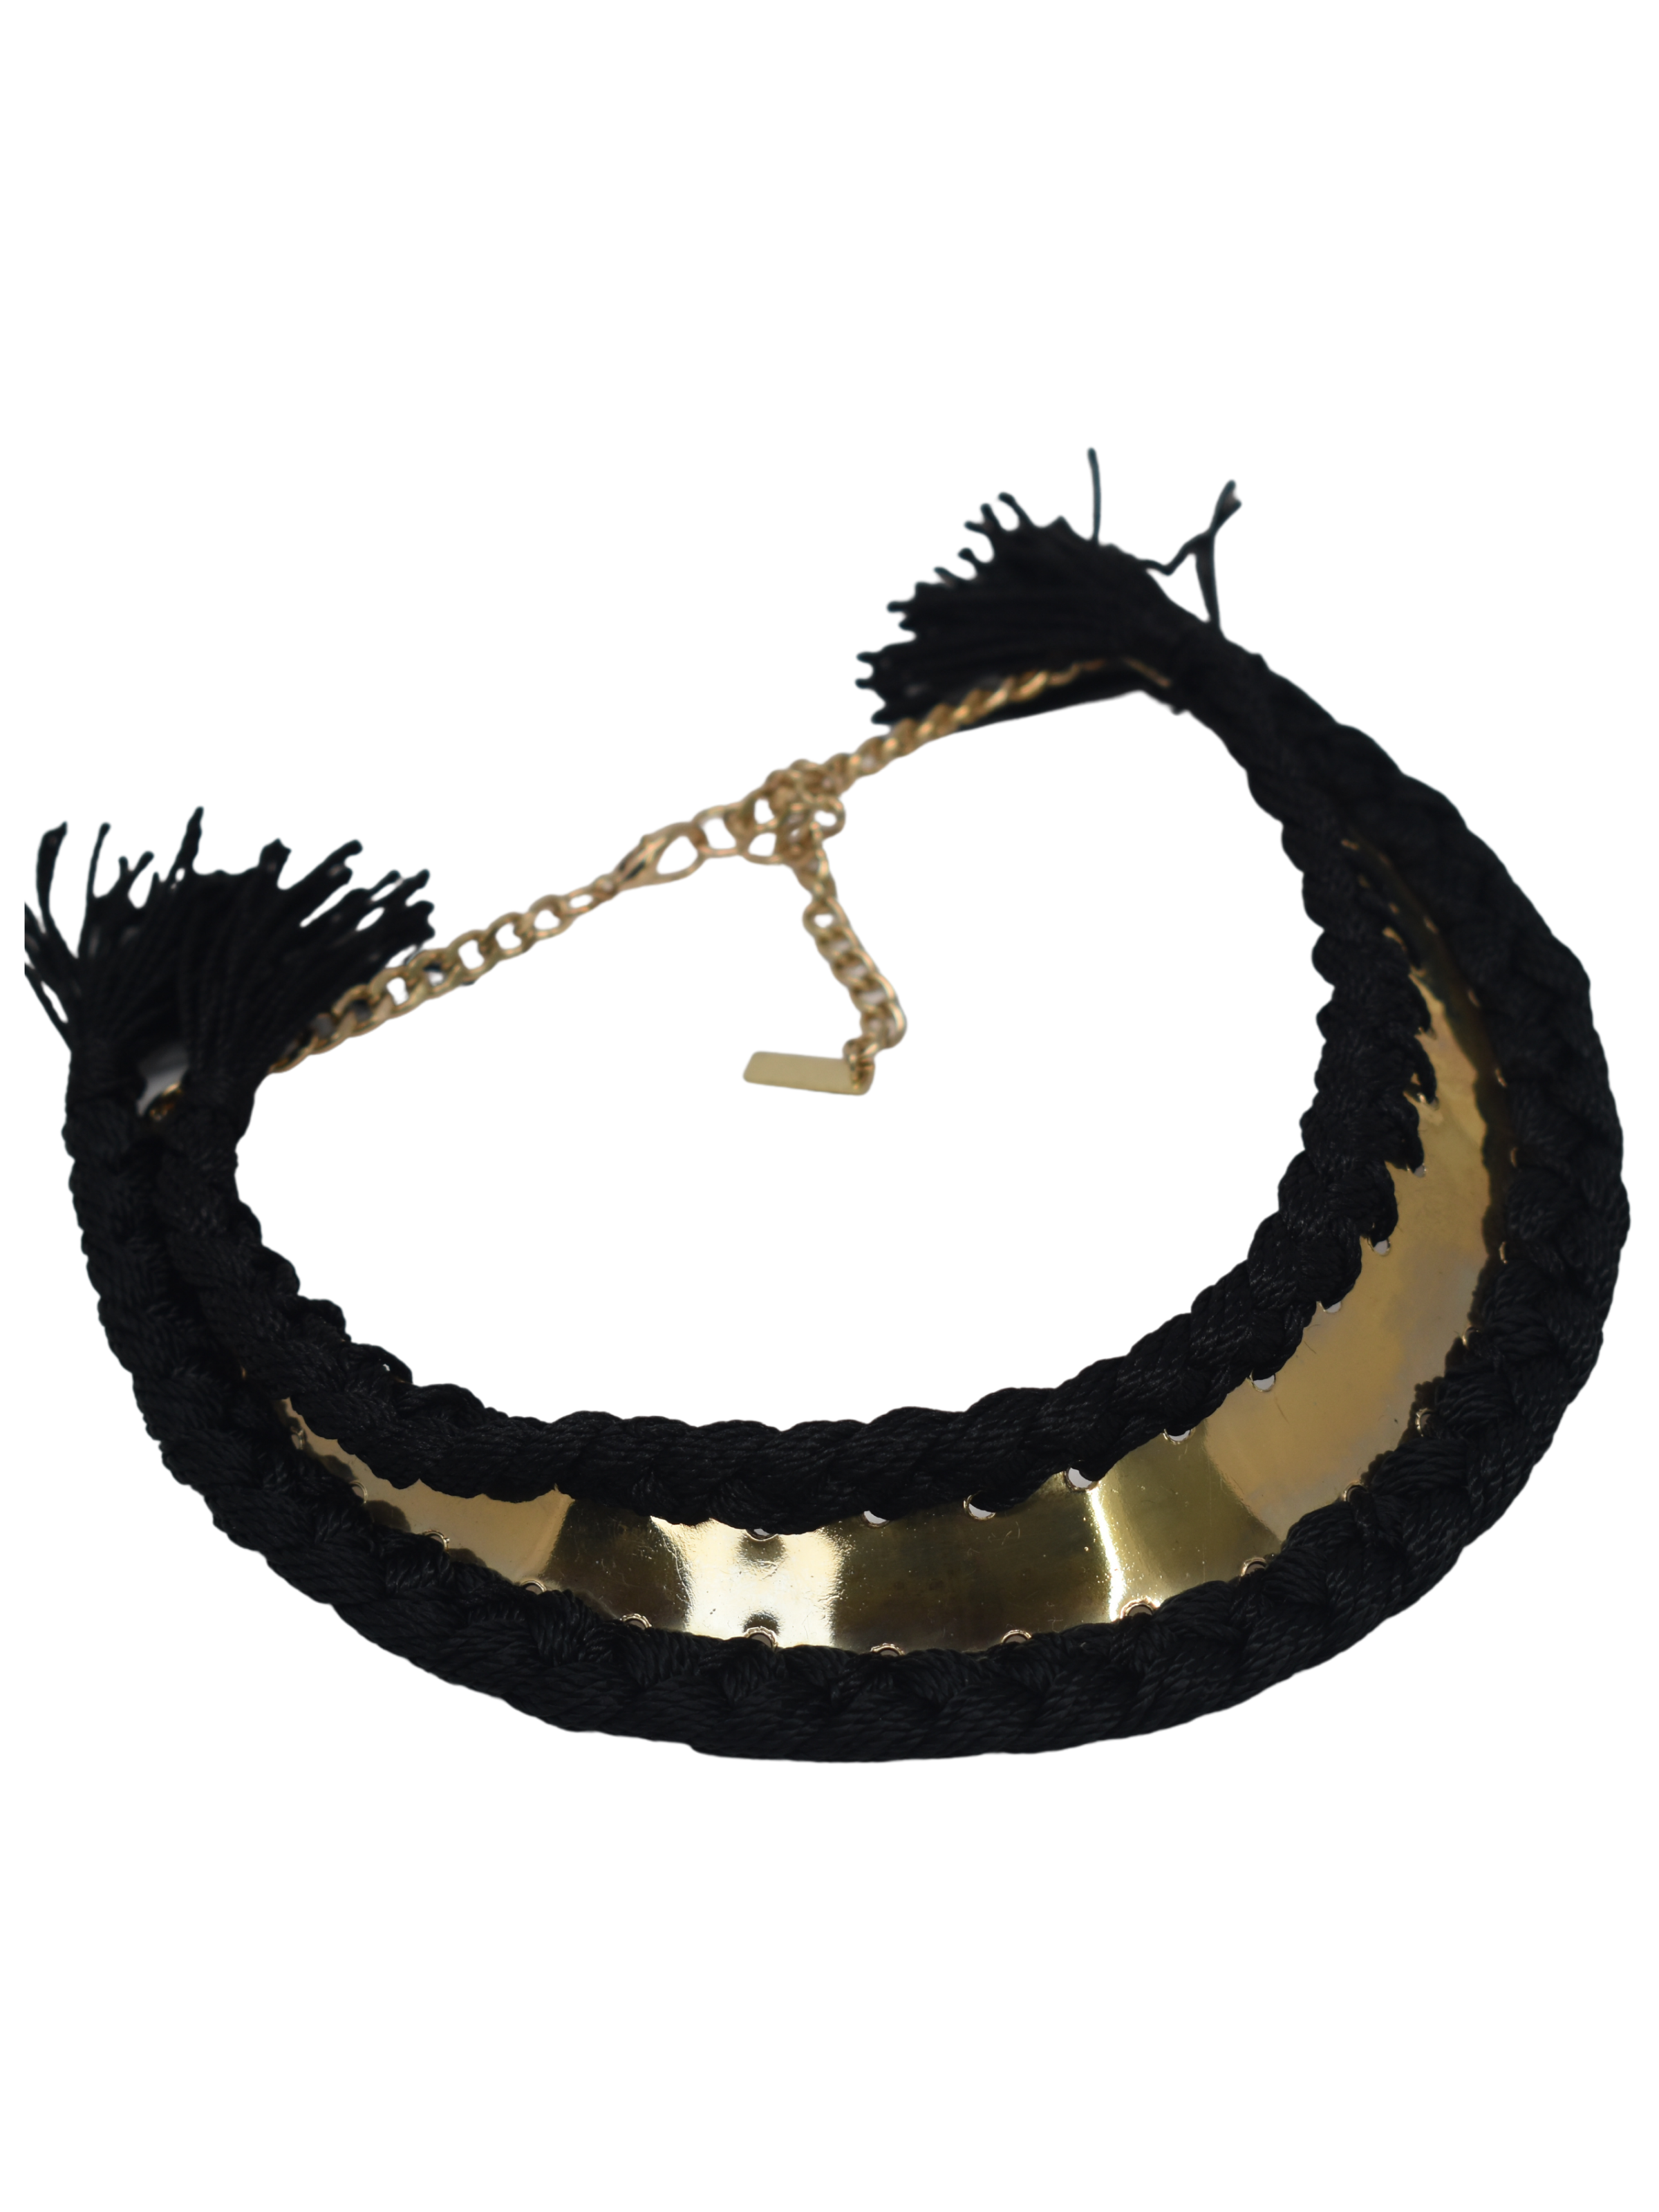 Luna Black Fringe Necklace with Gold Accents